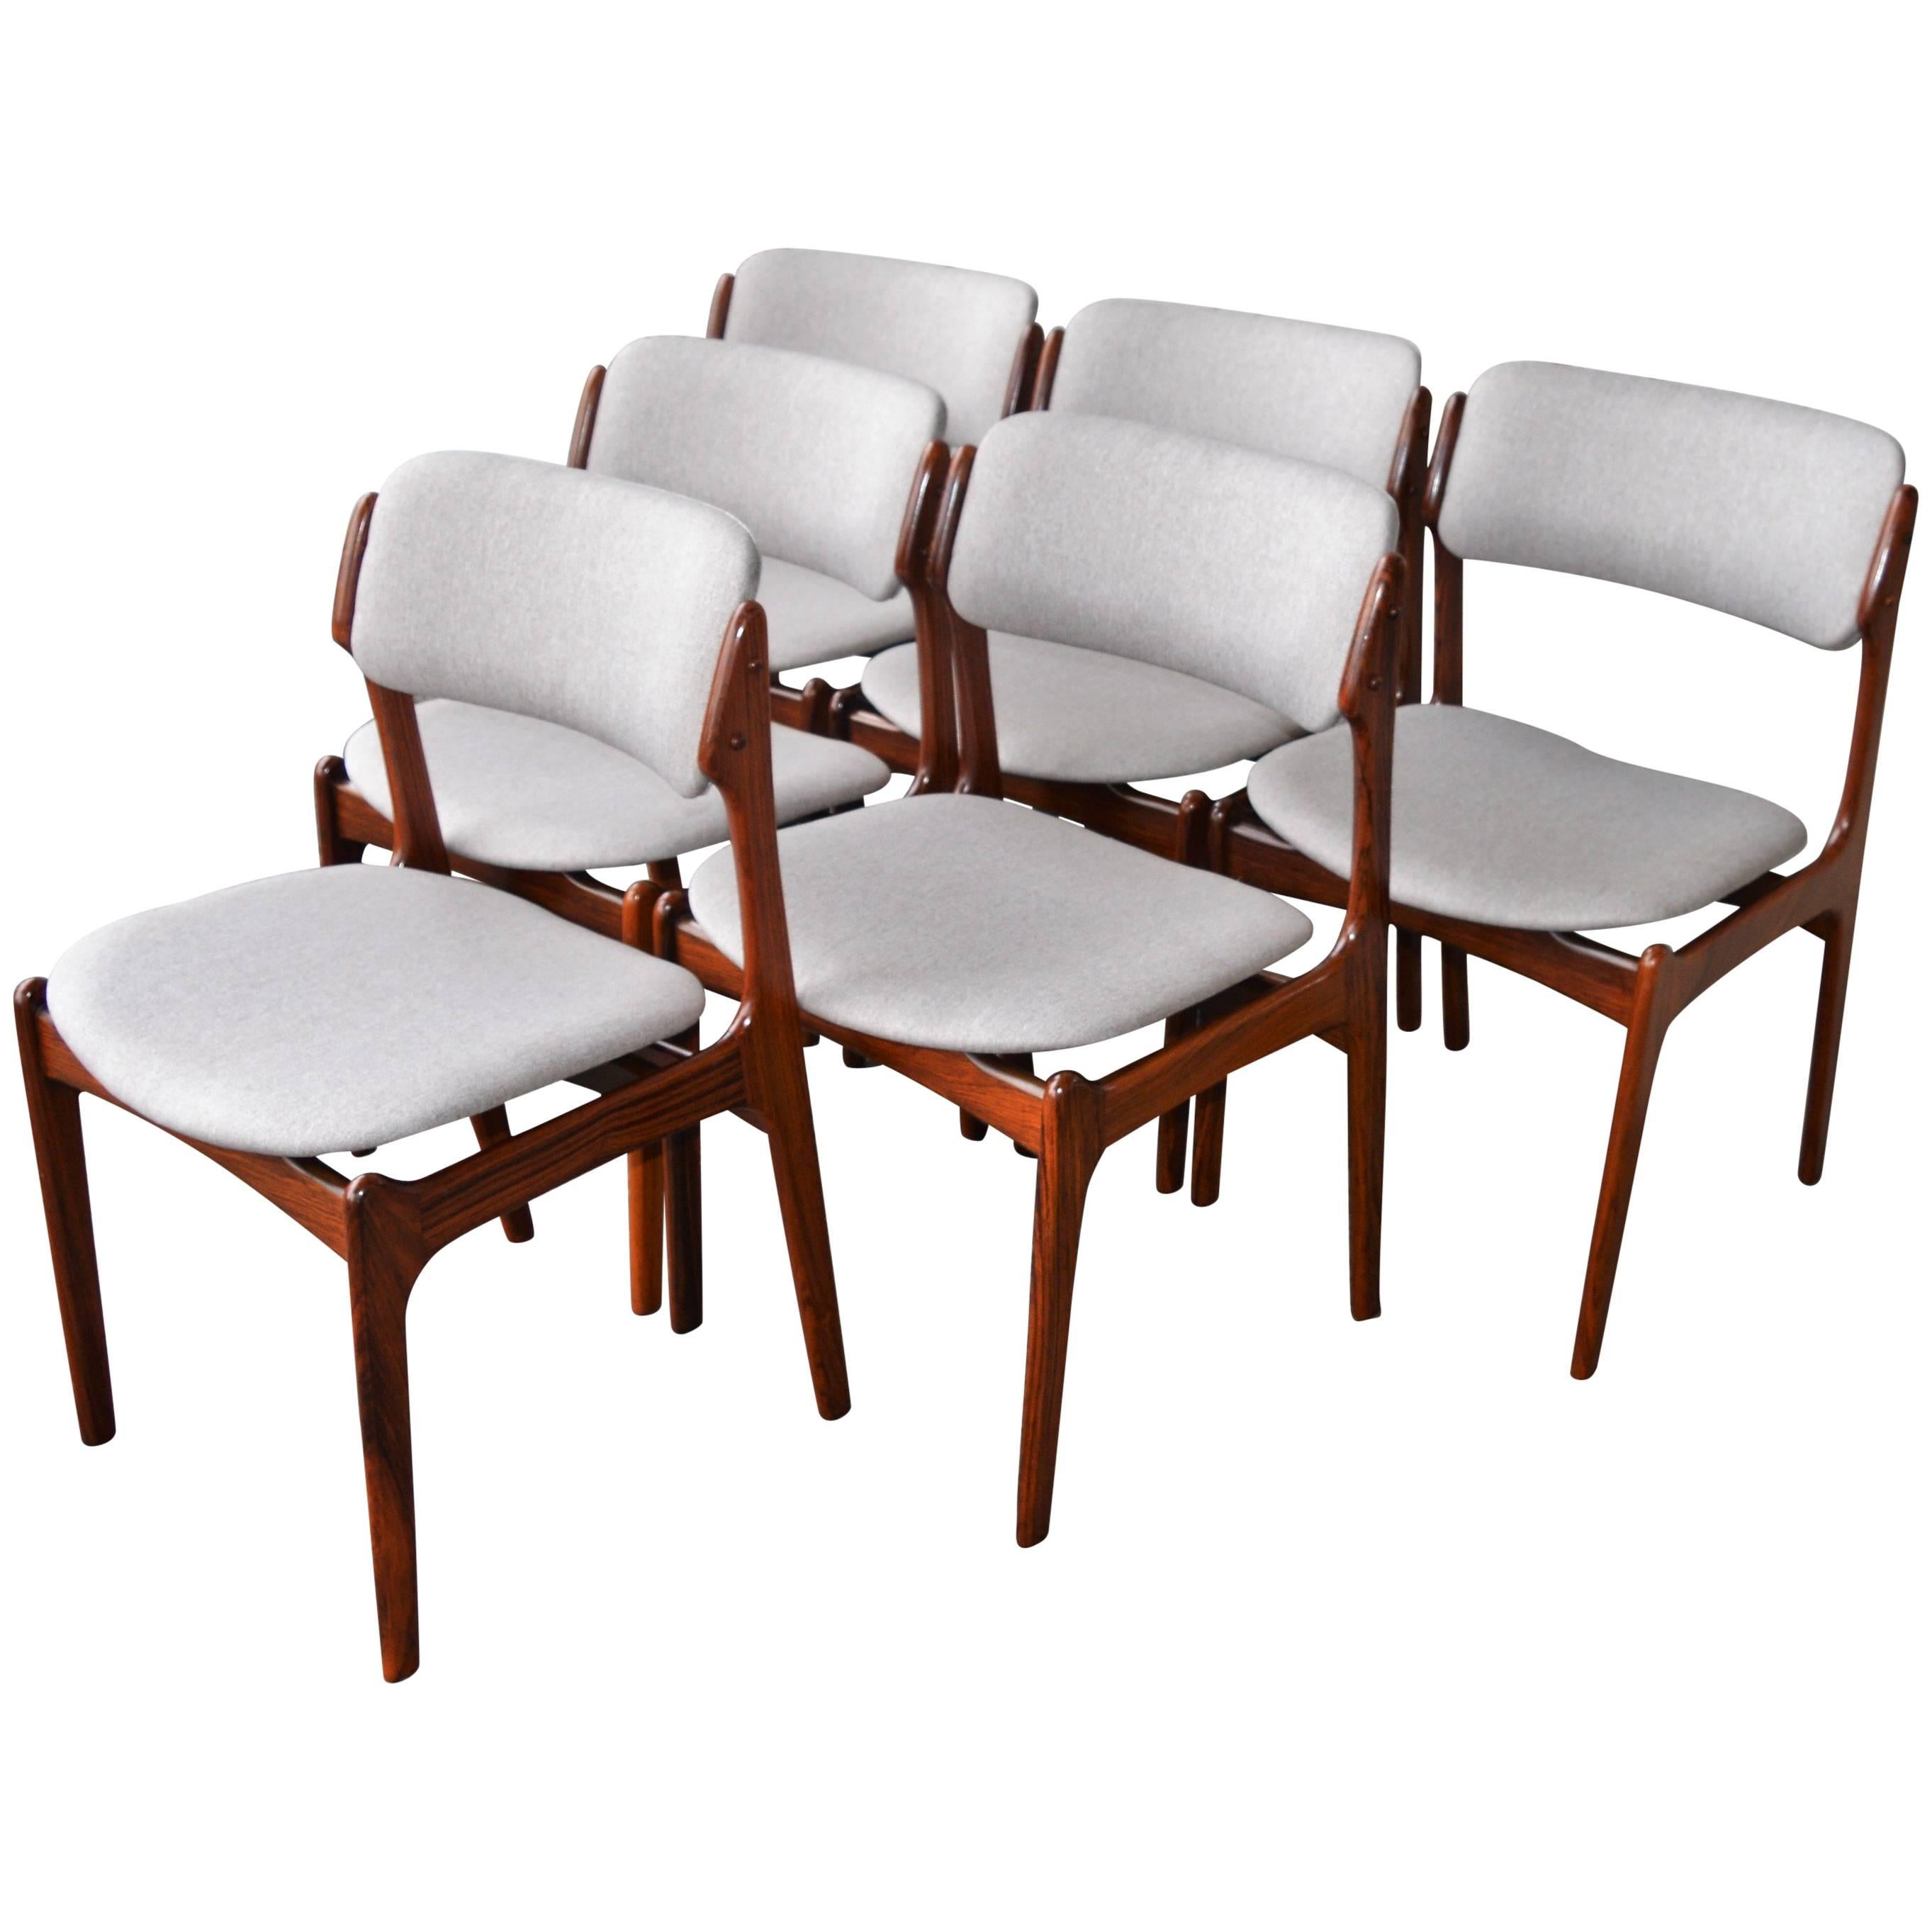 Erik Buch Model 49 Rosewood Dining Chairs, Set of Six, Danish Modern